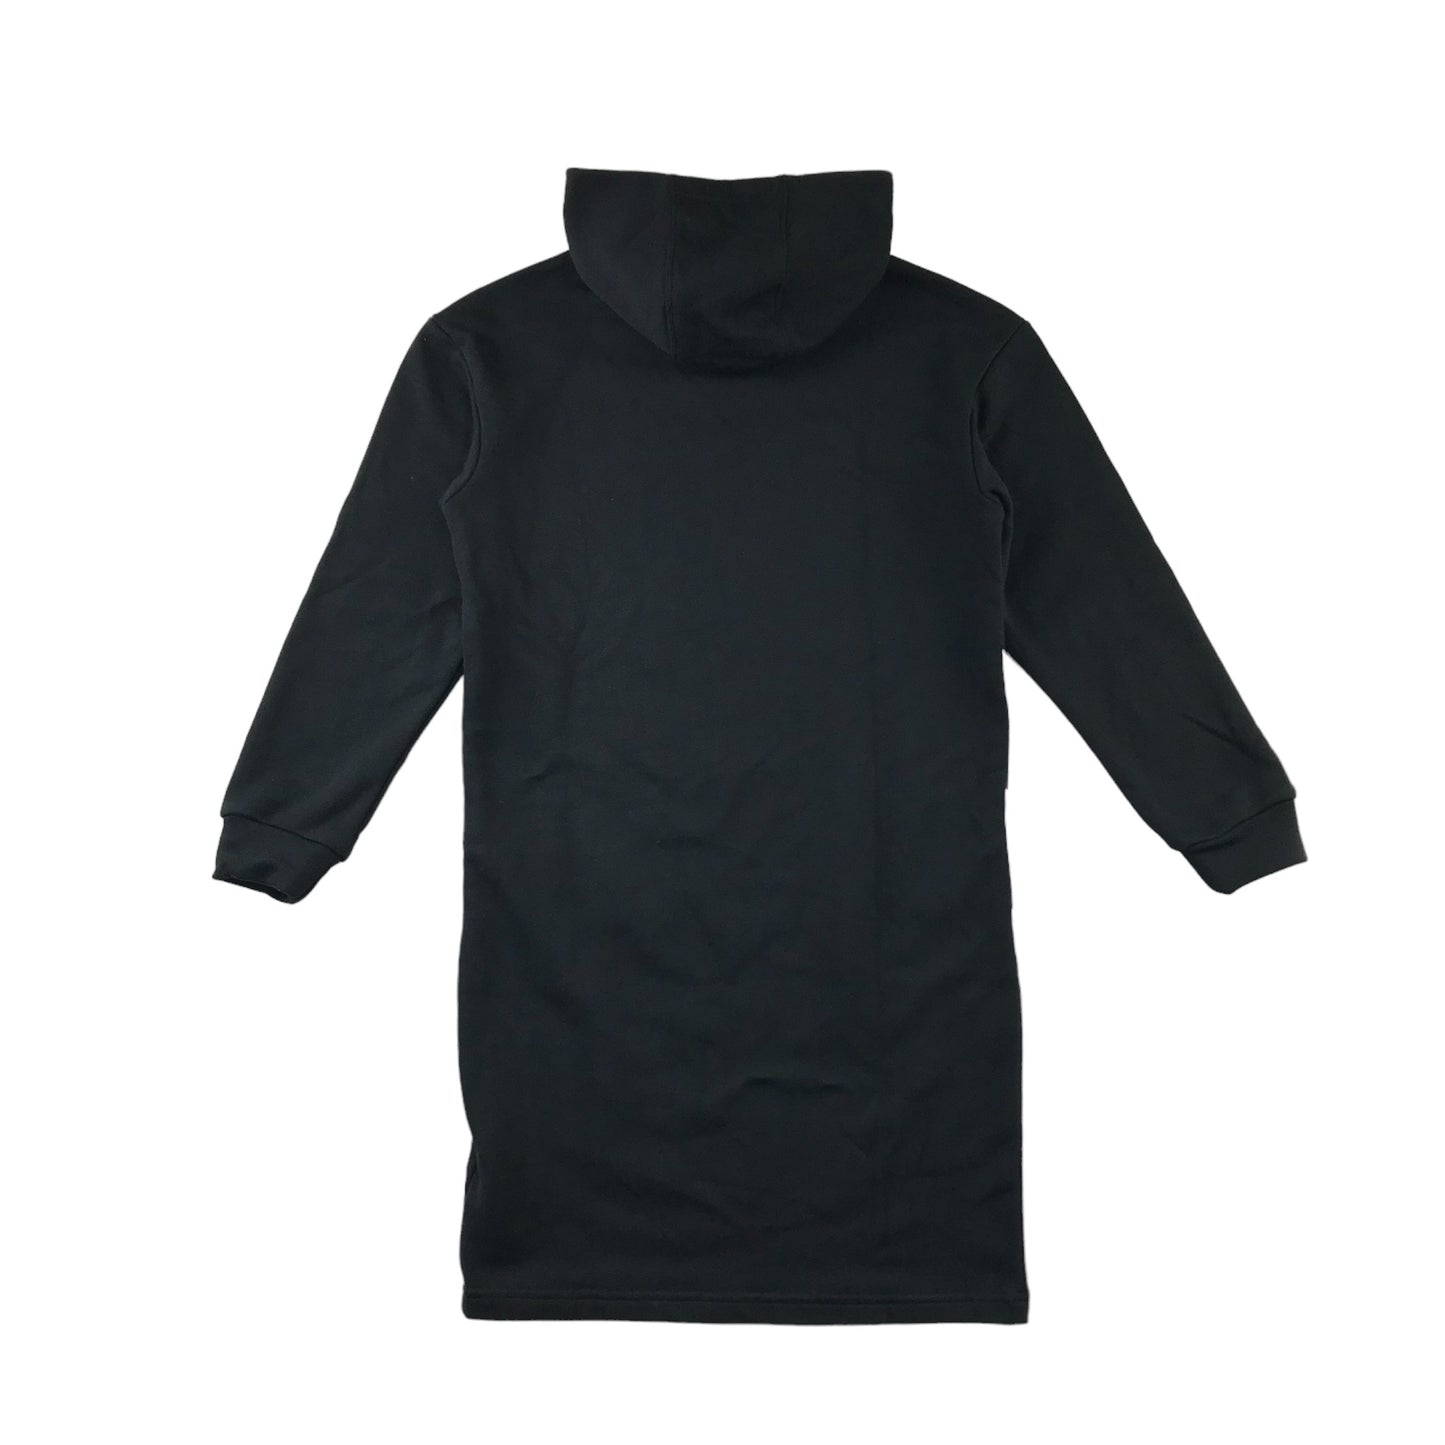 Adidas Hoodie Age 9 Black Long Dress with White Stripe Design